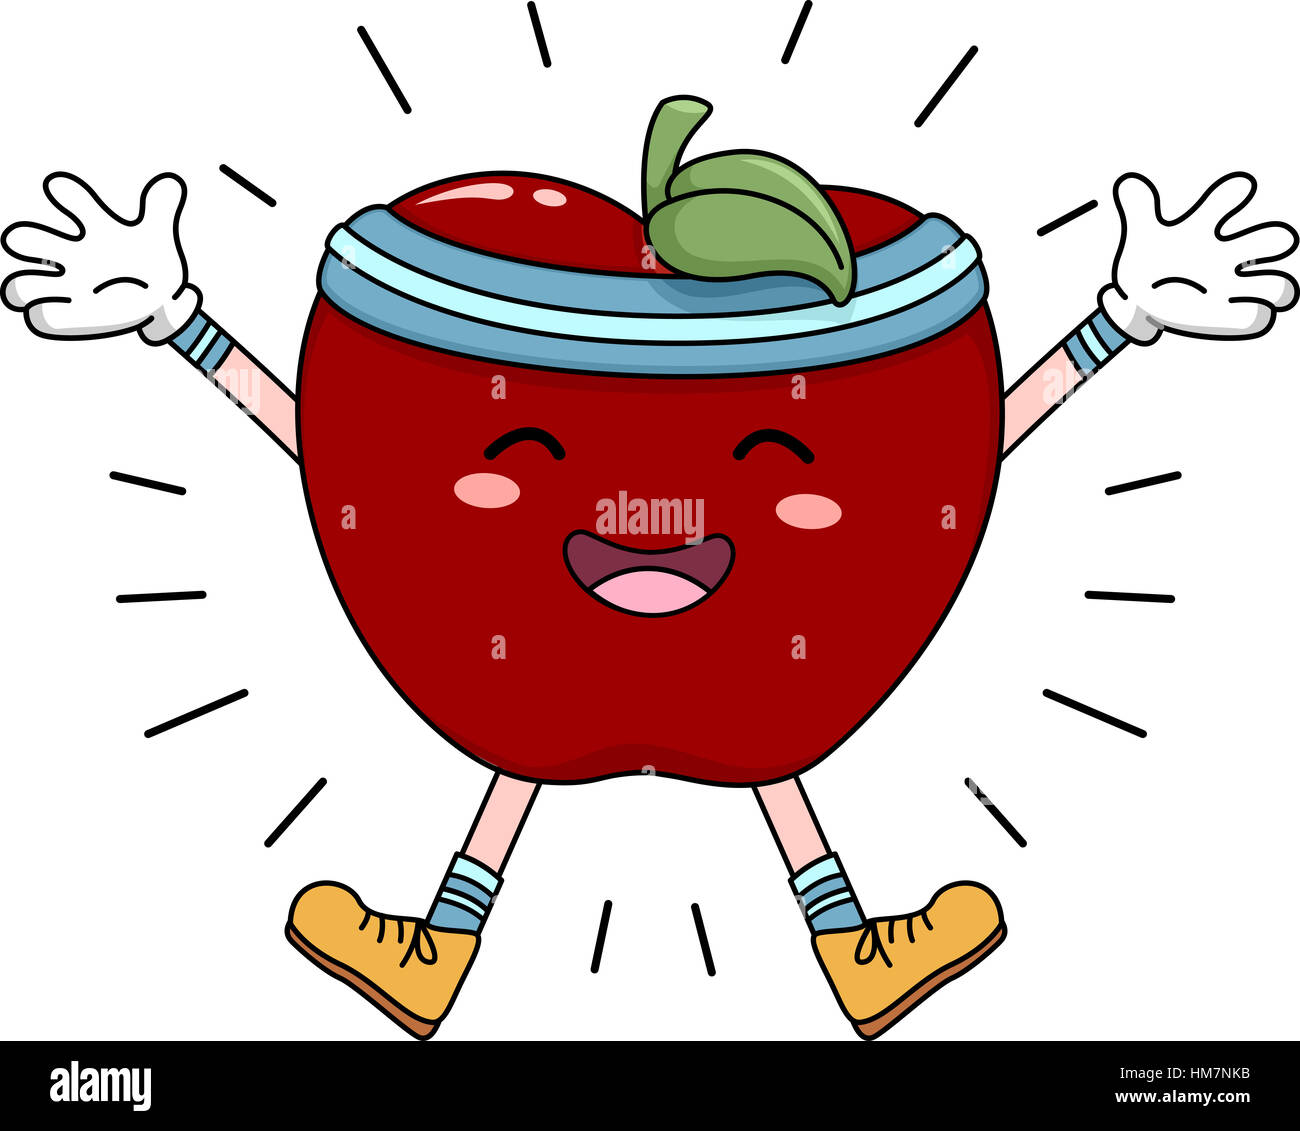 Mascot Illustration of an Apple Doing Jumping Jacks Stock Photo